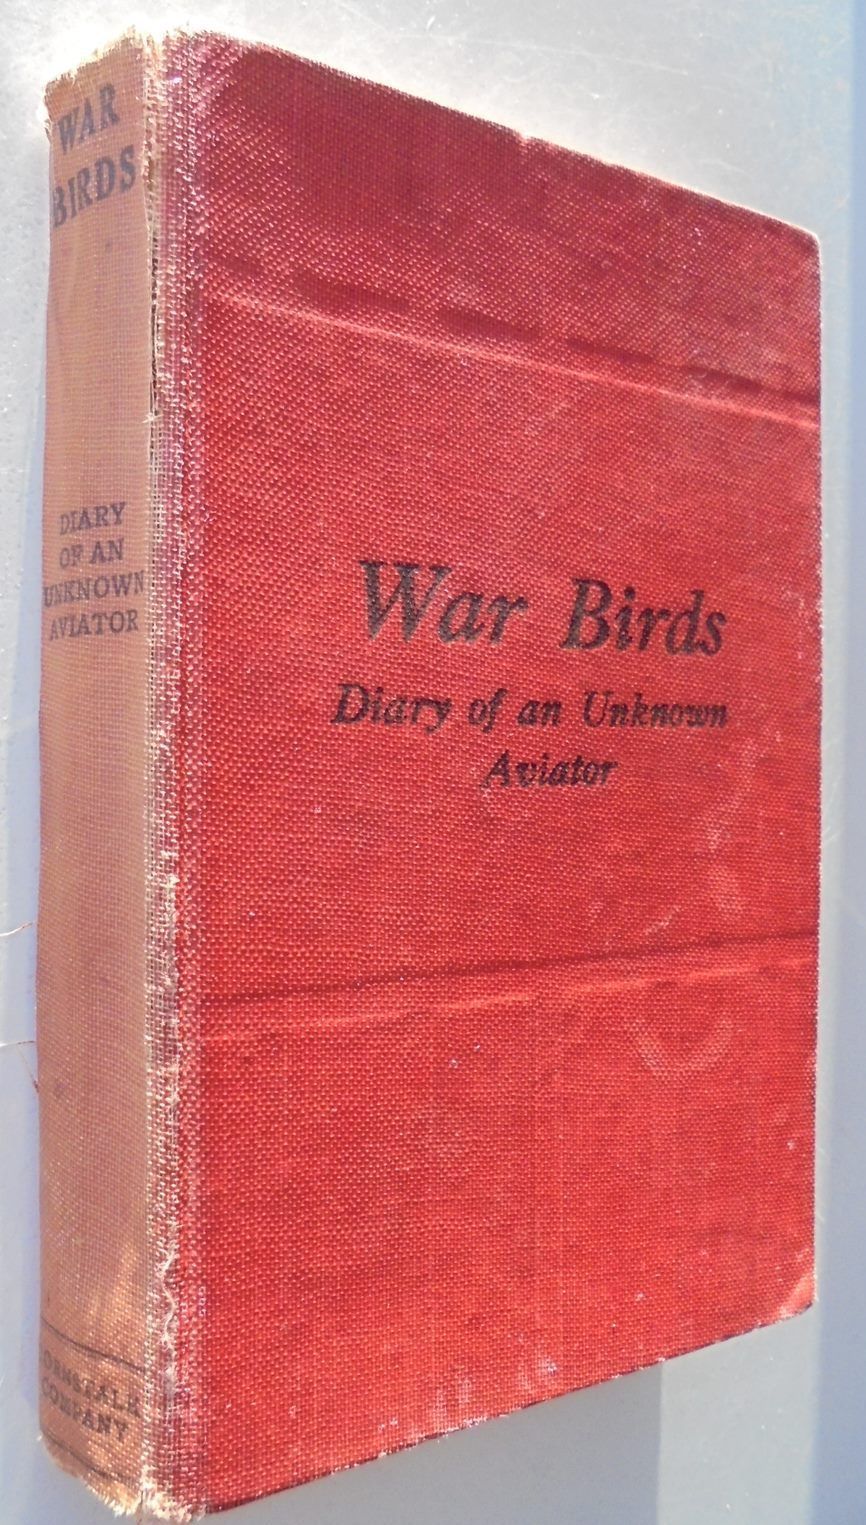 WAR BIRDS: Diary of an Unknown Aviator